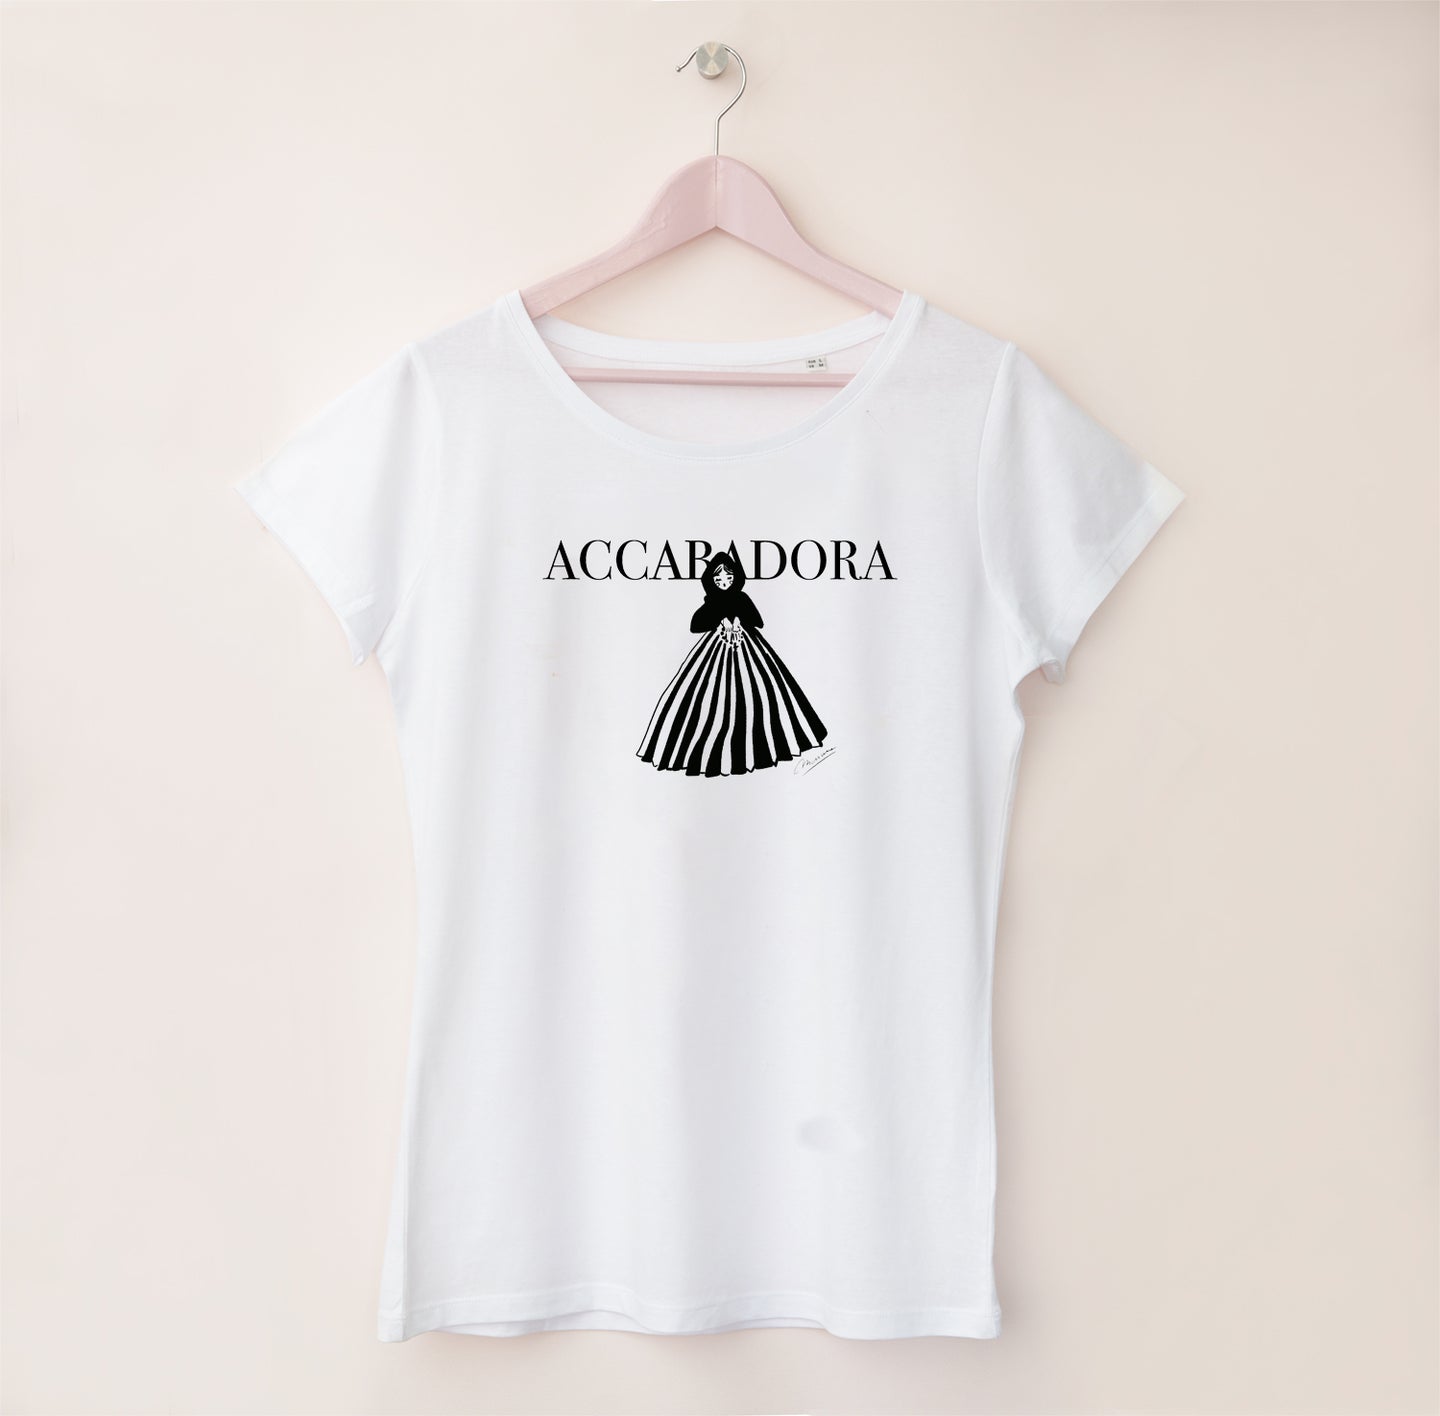 Accabadora t-shirt sagomata